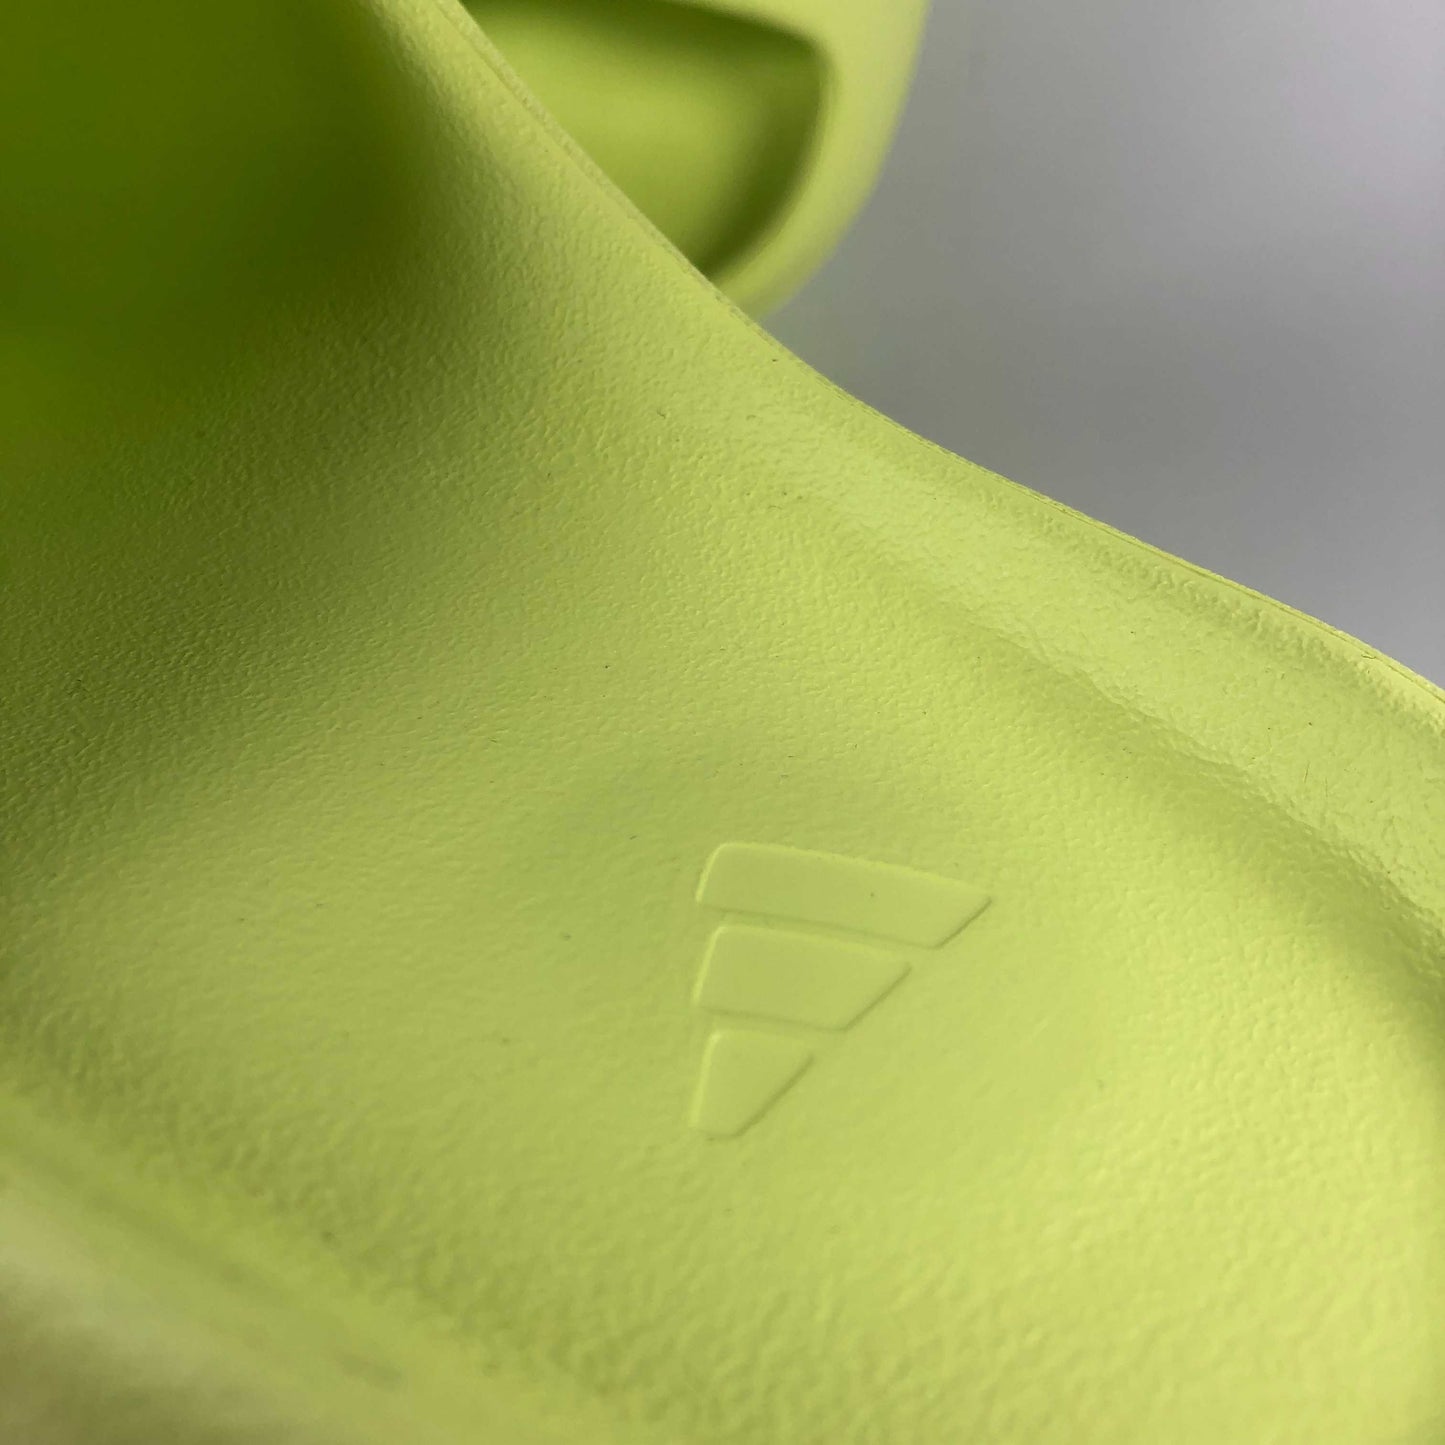 Adidas Yeezy Slide Glow Green Schaum